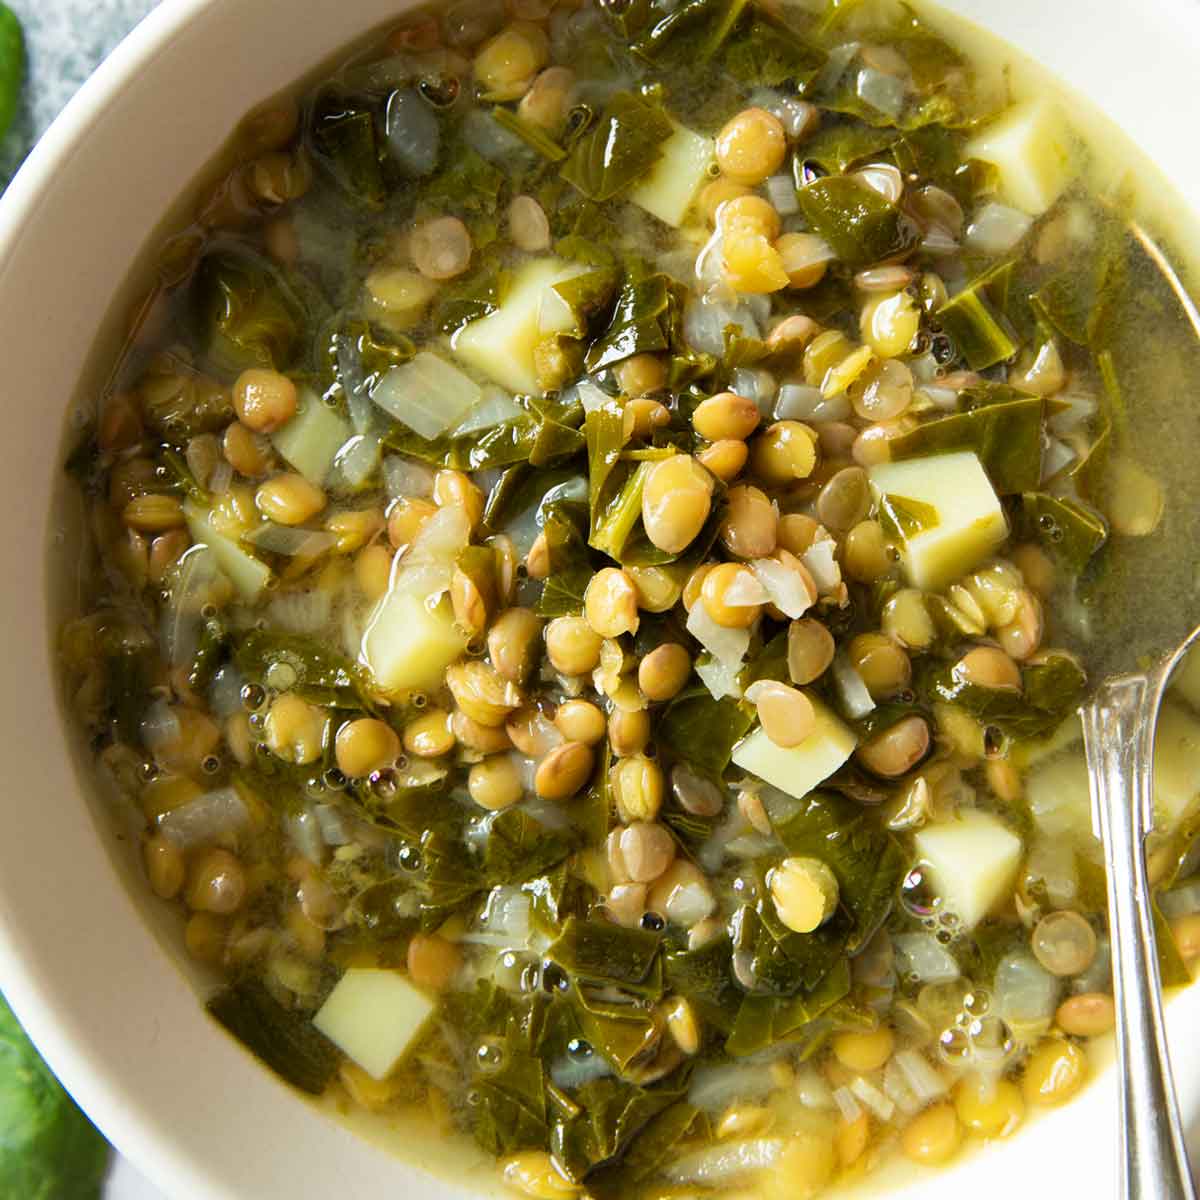 Green lentil soup